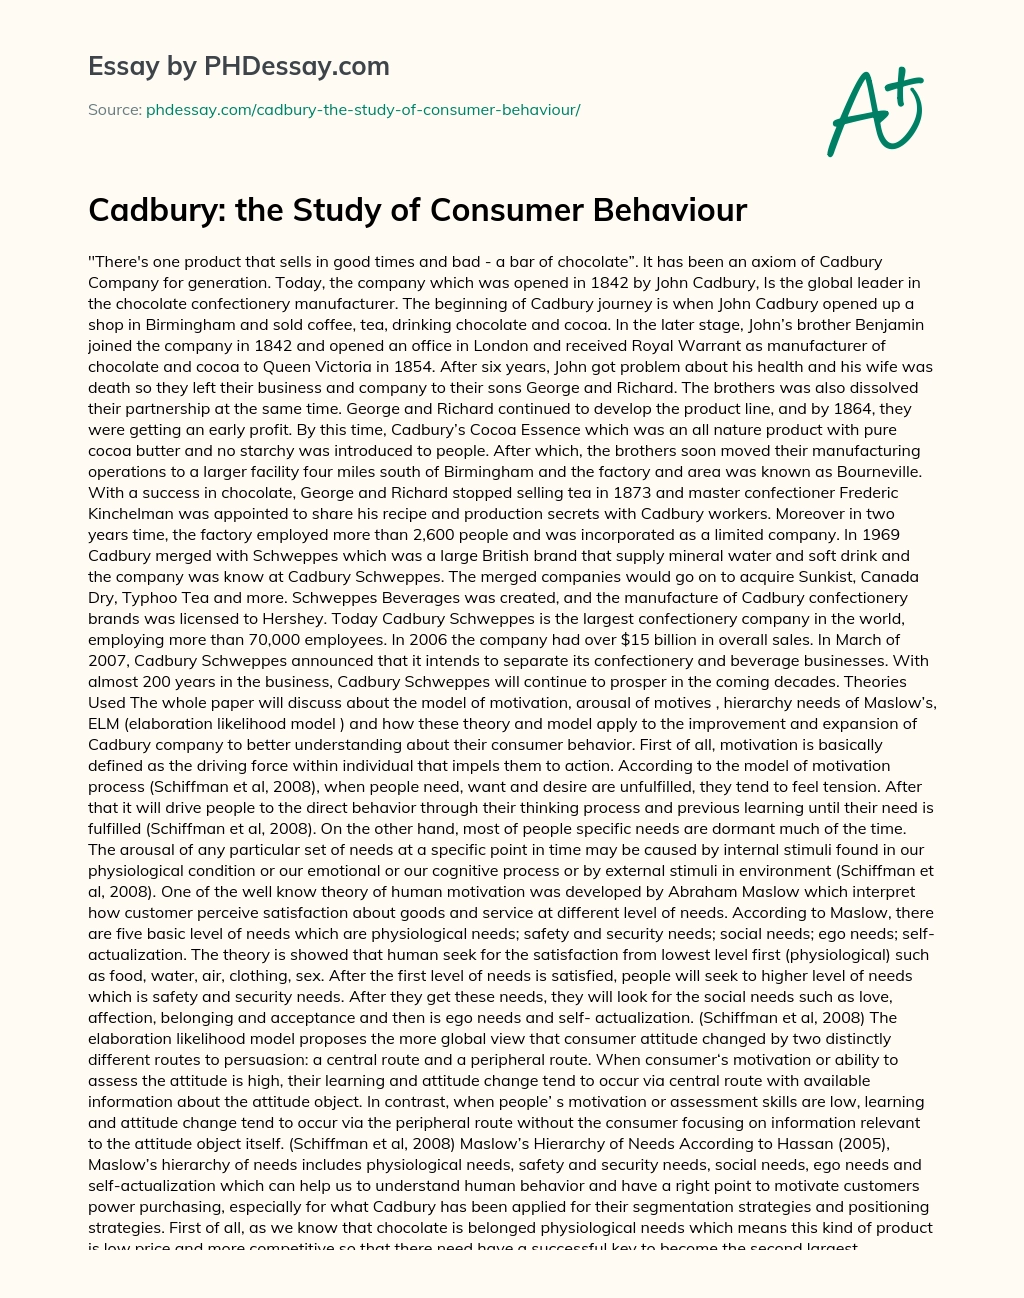 Cadbury: the Study of Consumer Behaviour essay